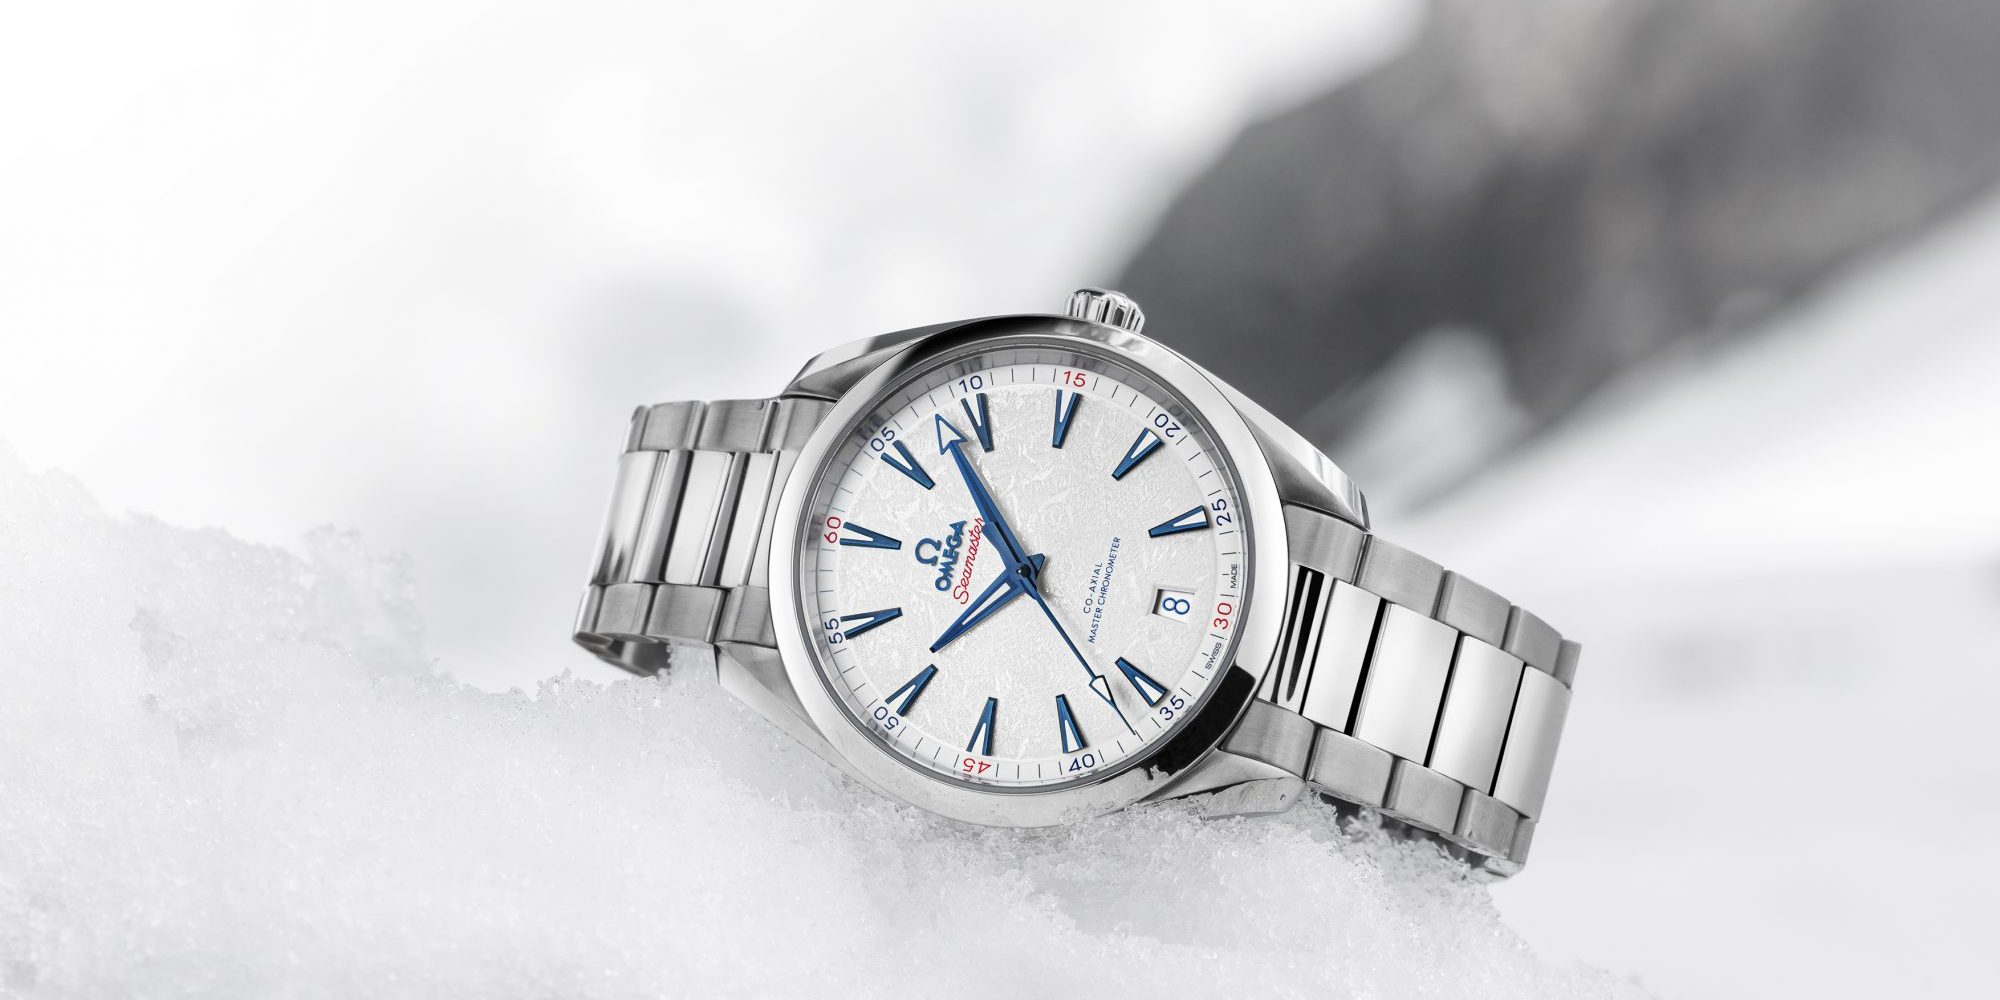 H OMEGA εμπνεύστηκε από το πάγο το ρολόι που δημιούργησε για τους Αγώνες Beijing 2022